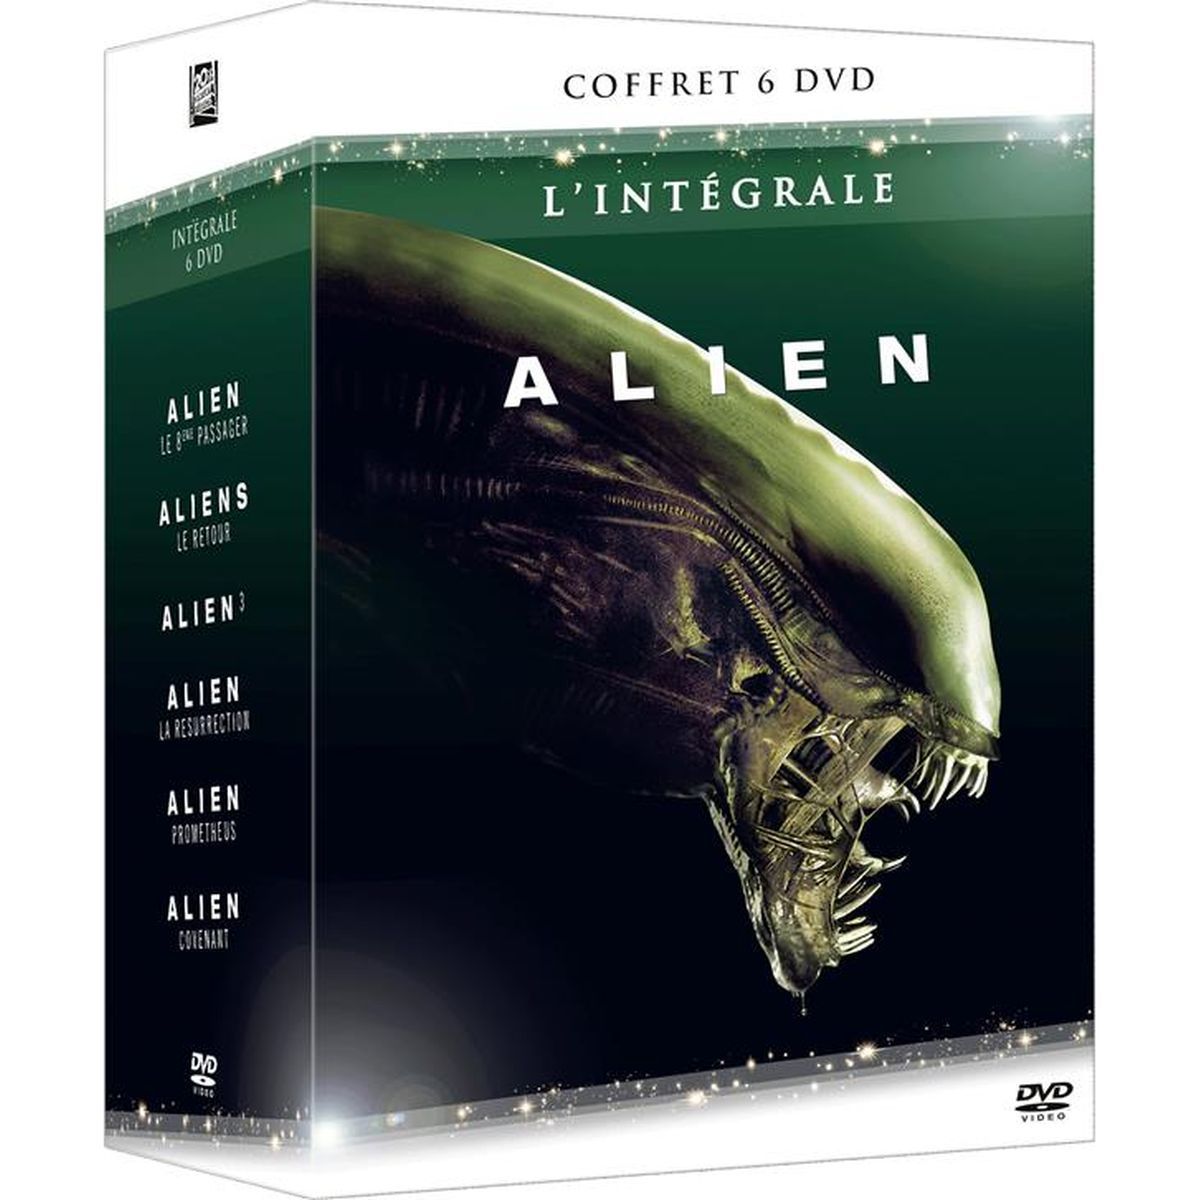 Coffret DVD Alien L'intégrale 6 films